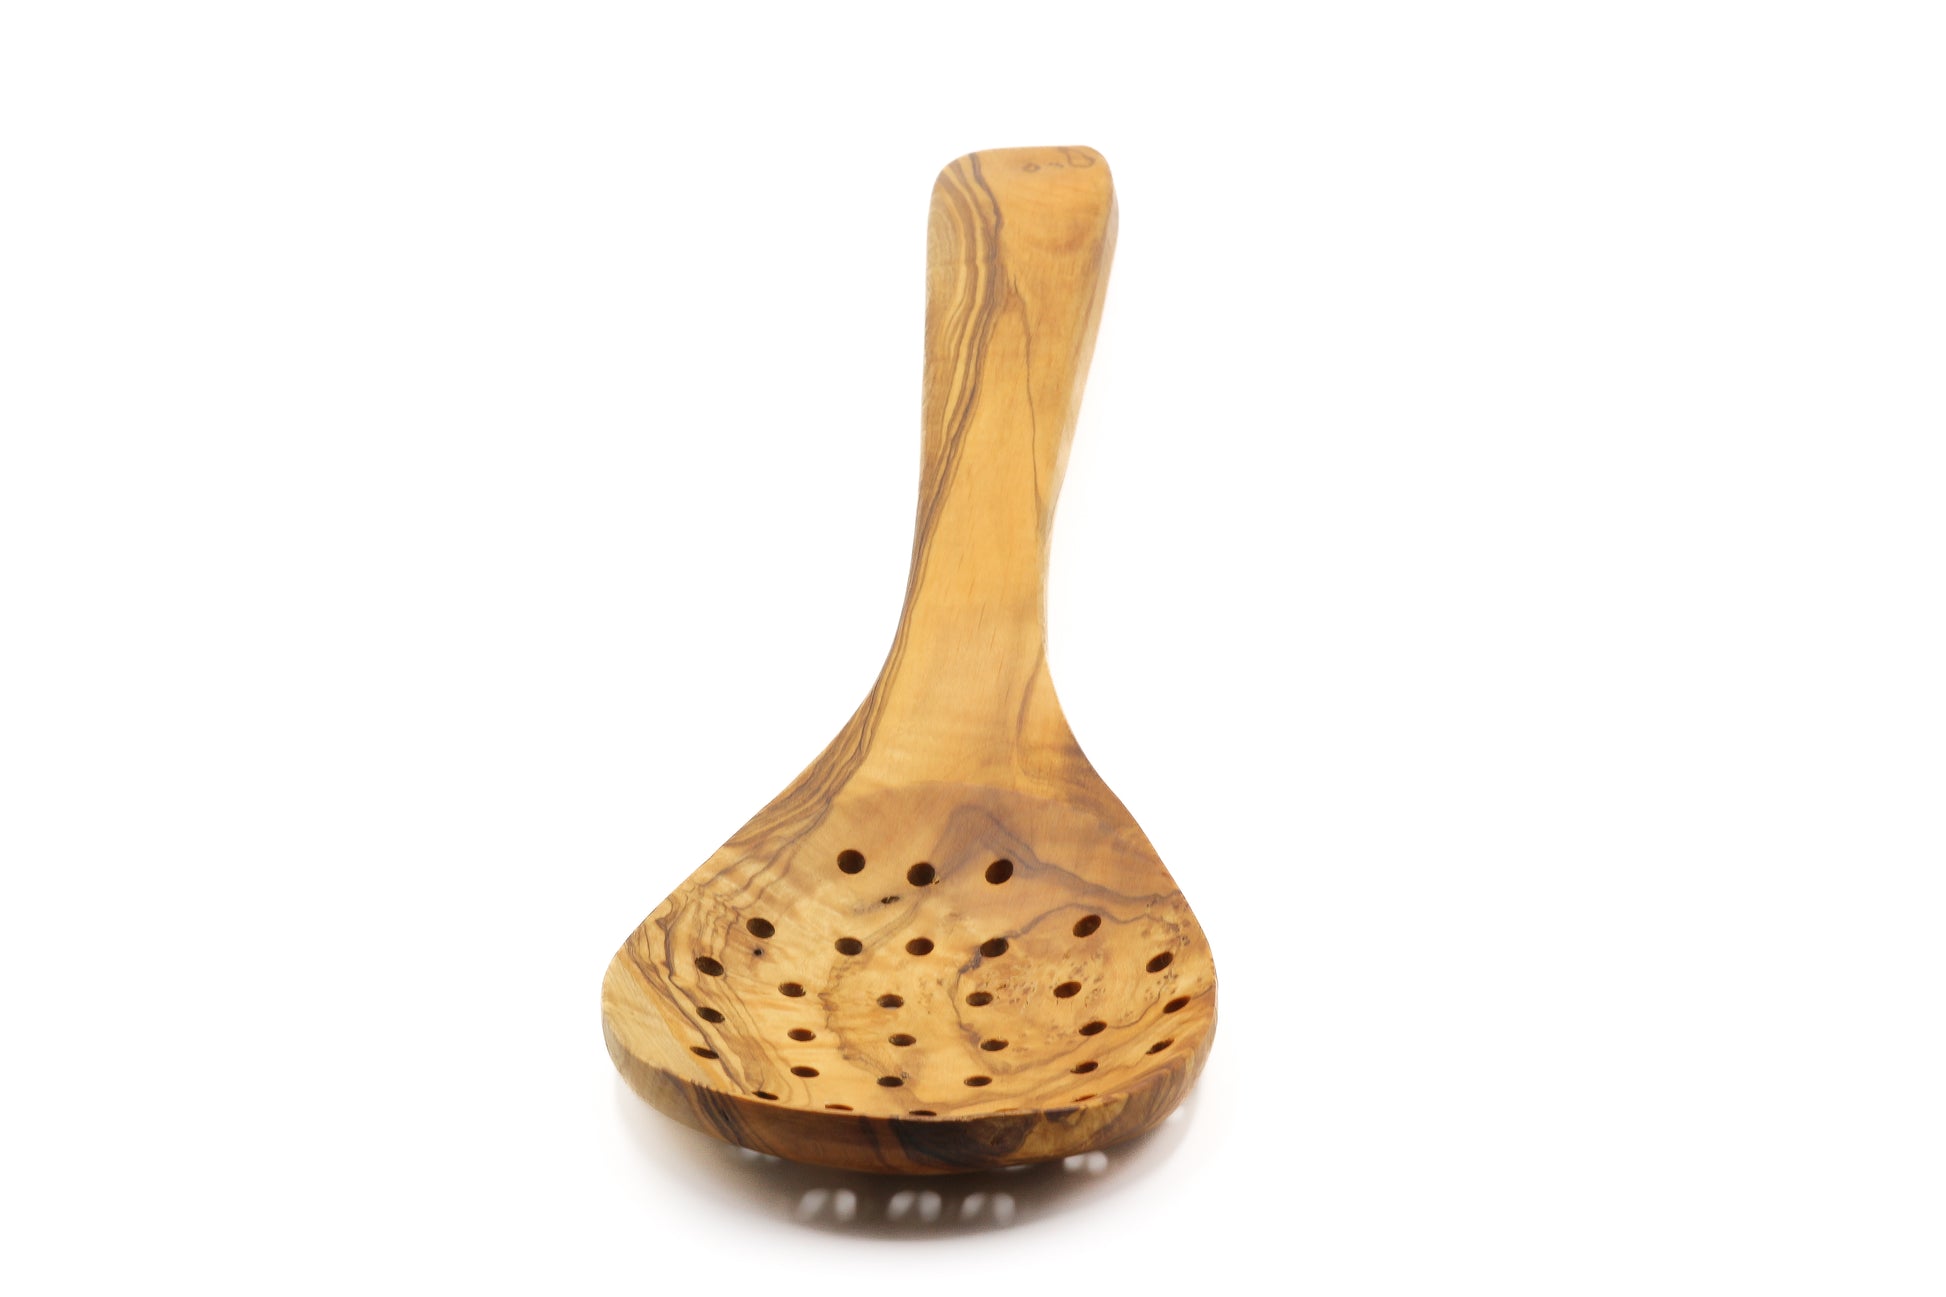 Olive wood draining spoon, skimmer, and serving utensil